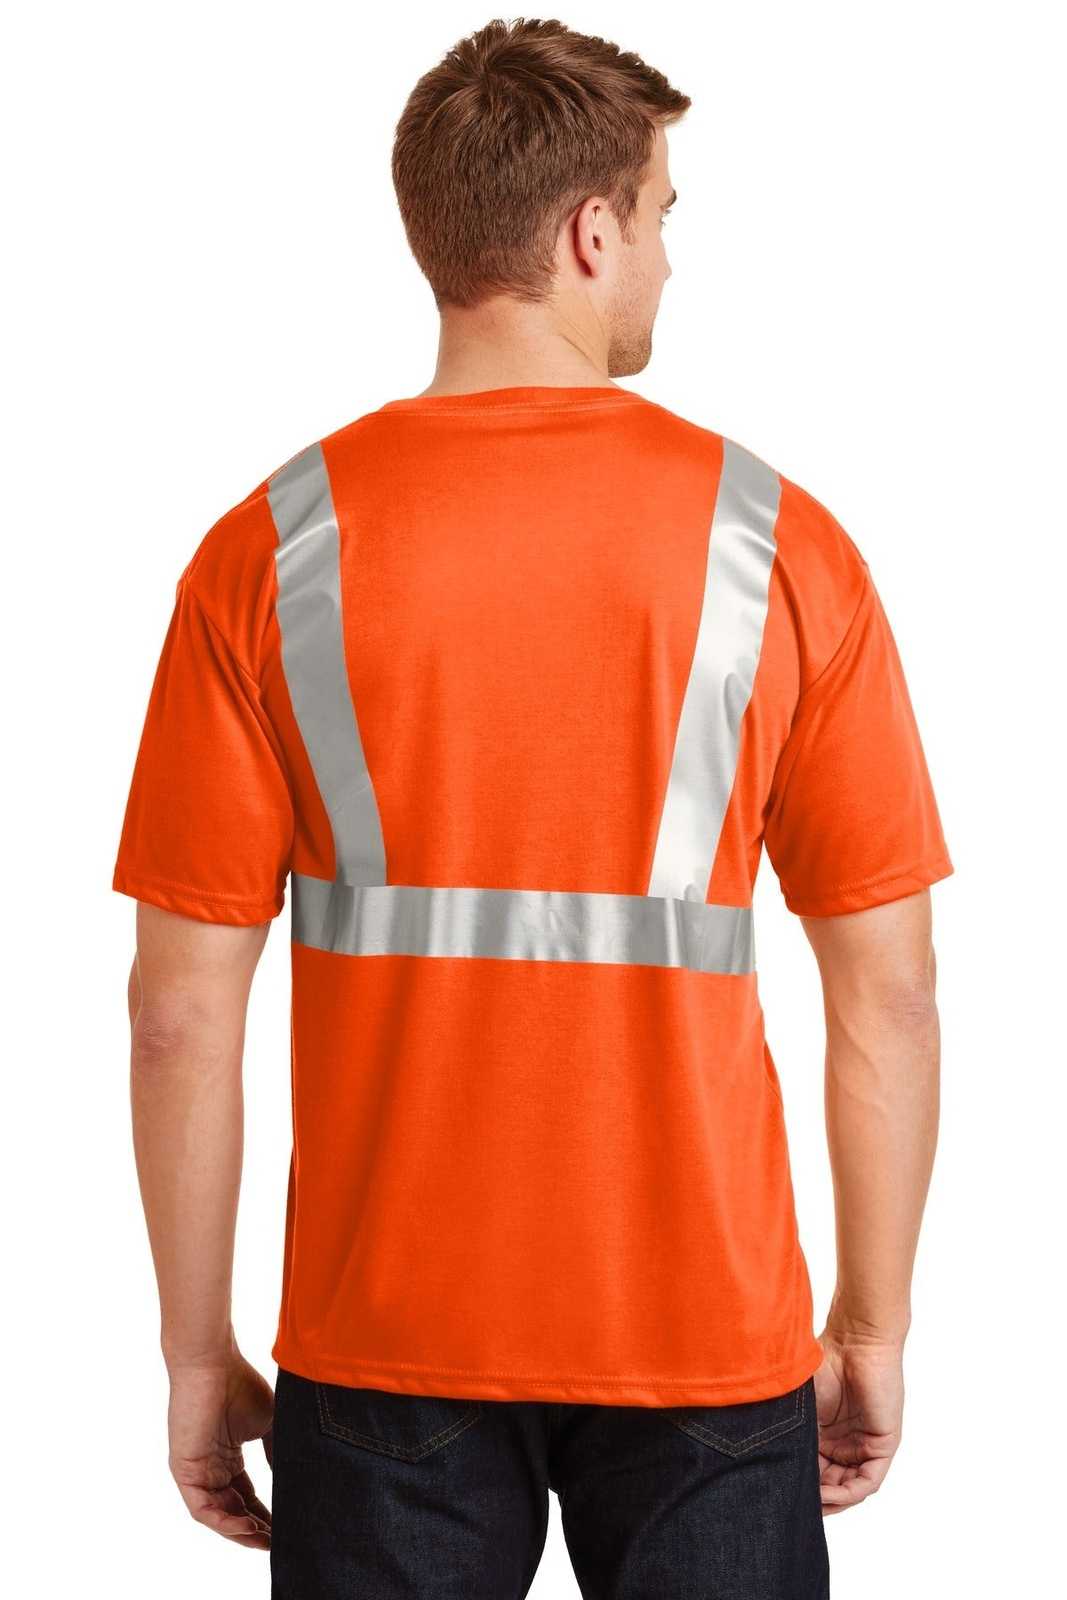 CornerStone CS401 ANSI 107 Class 2 Safety T-Shirt - Safety Orange Reflective - HIT a Double - 2